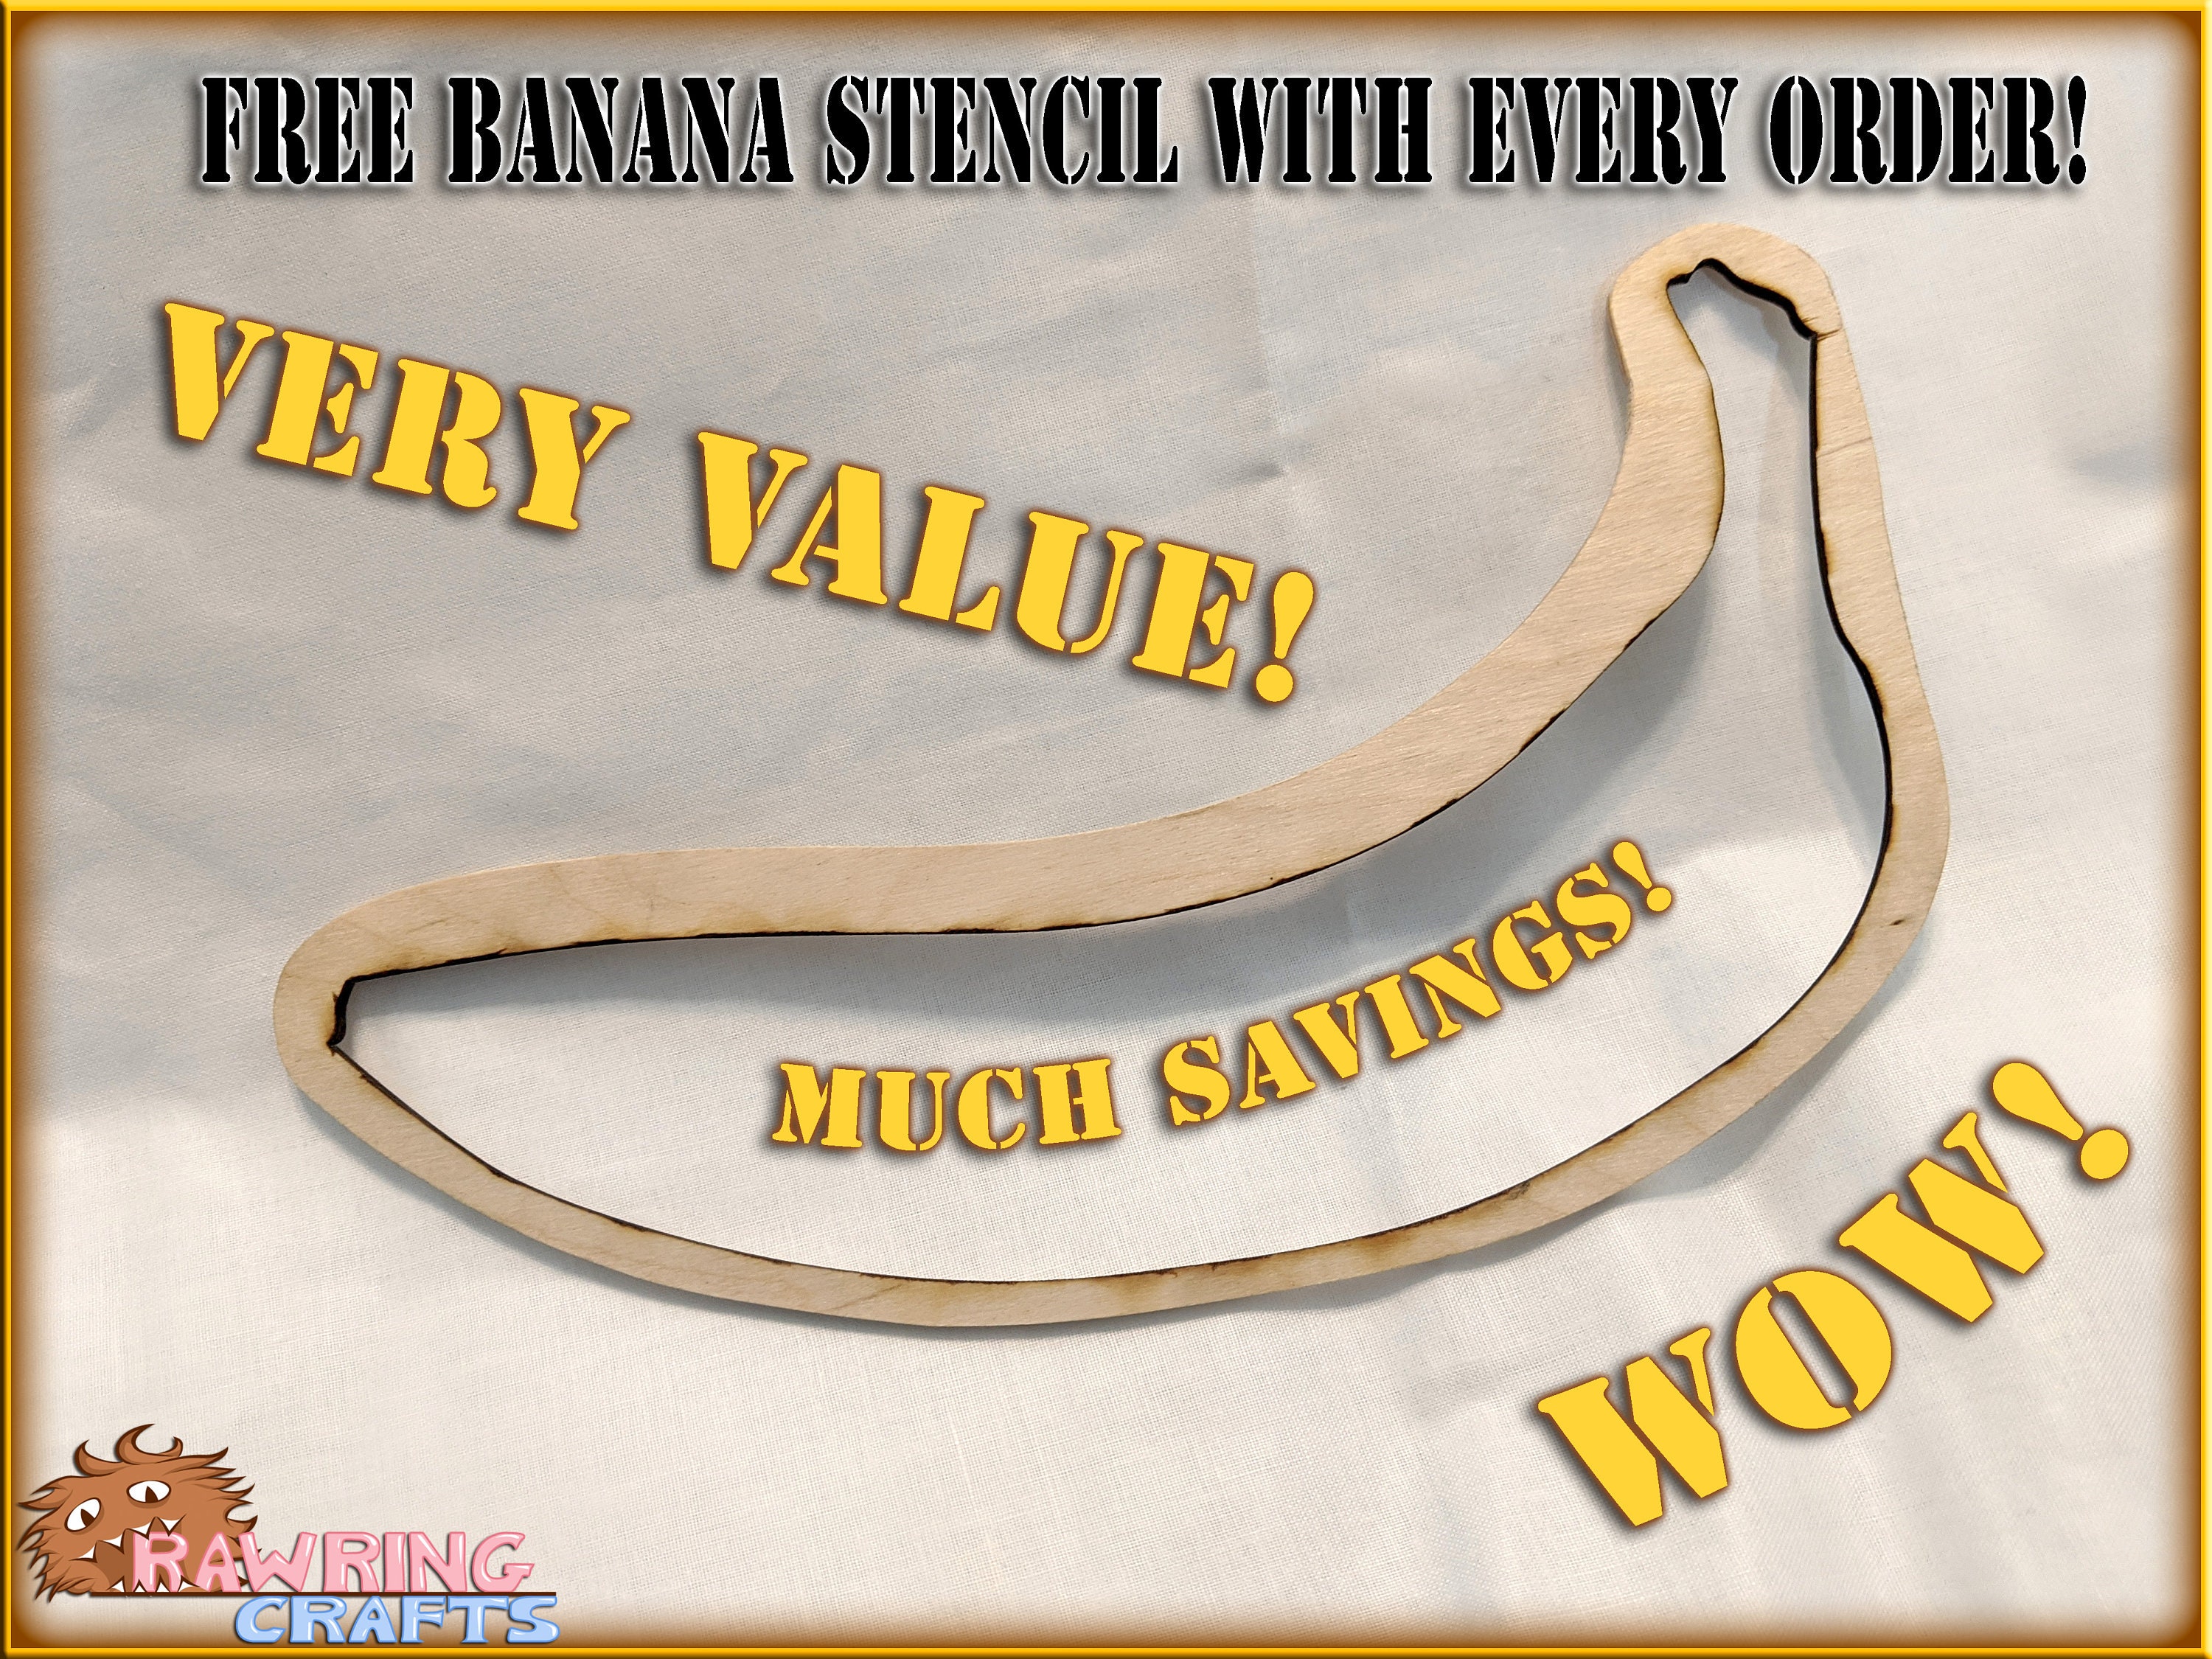 Cake of over 500 yards of yarn banana for scale. : r/BananasForScale